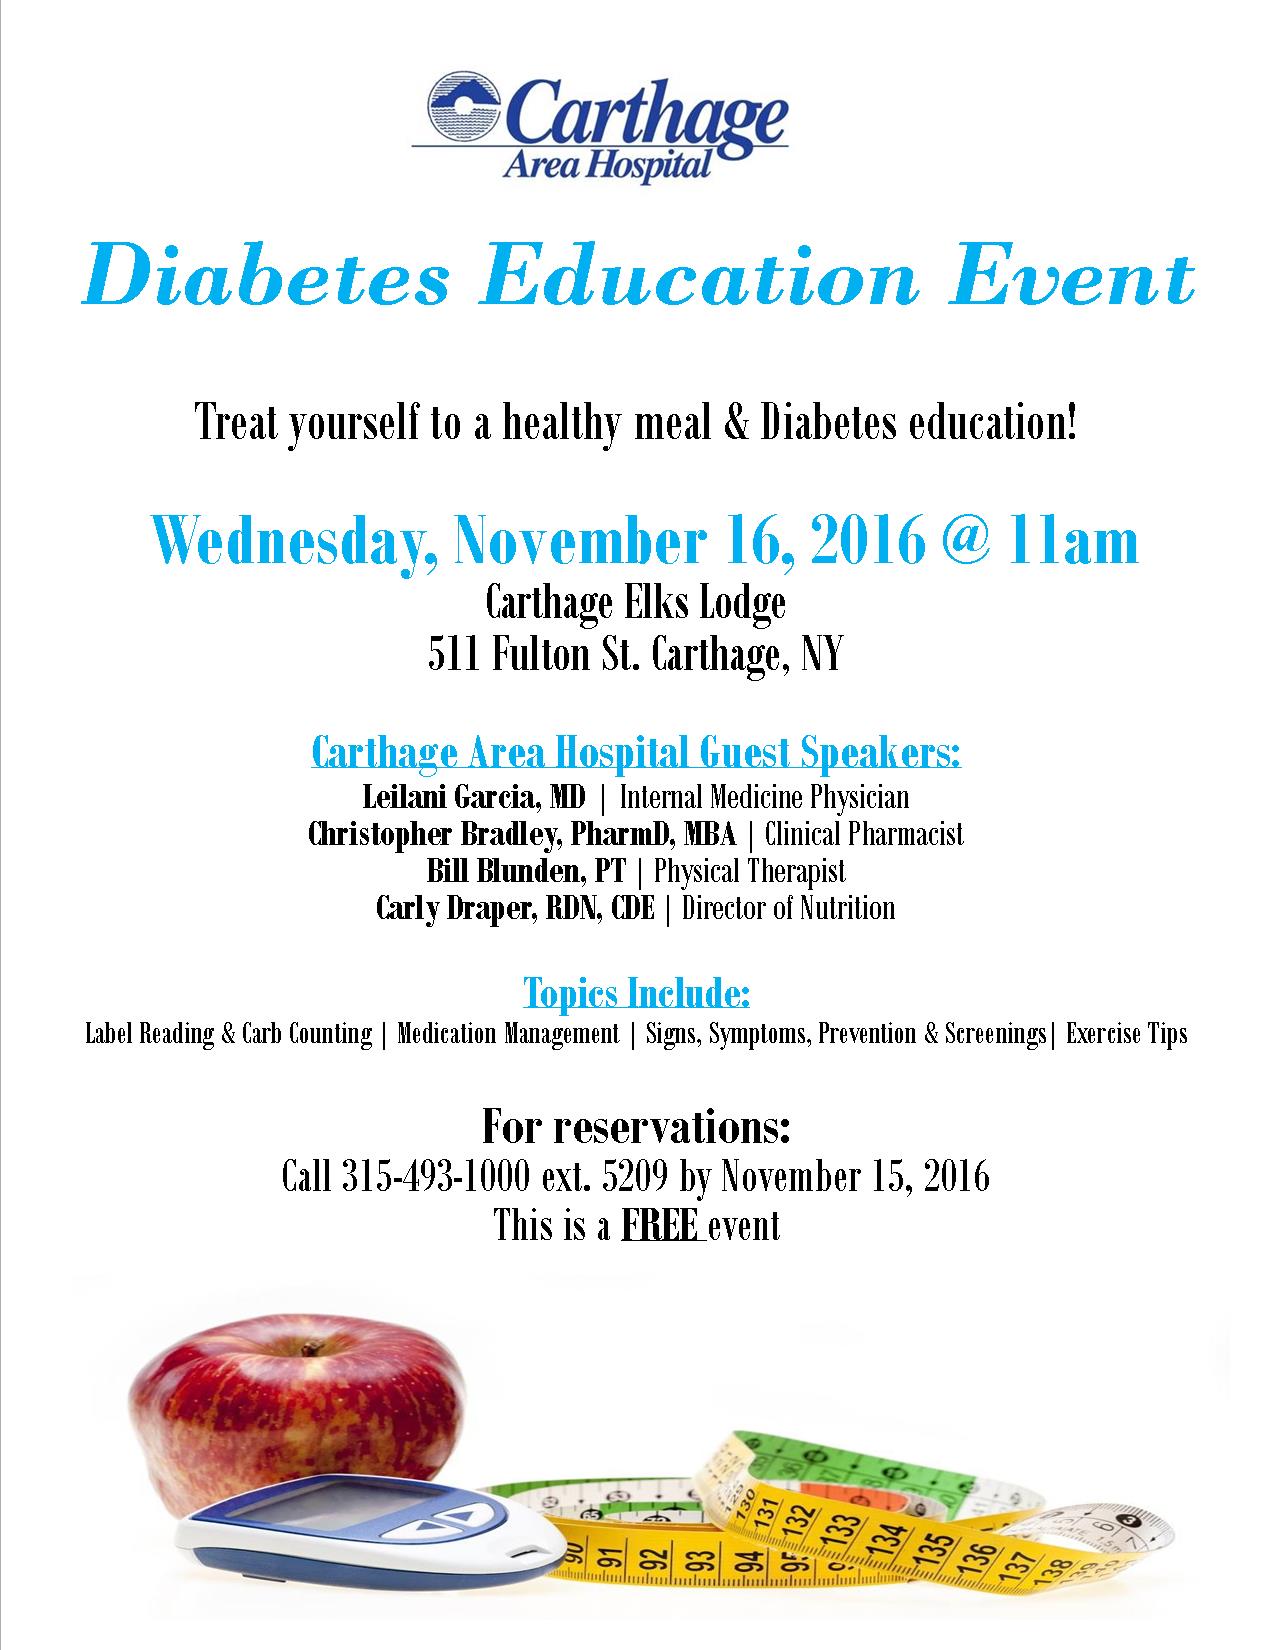 Advertisement for diabetes education event